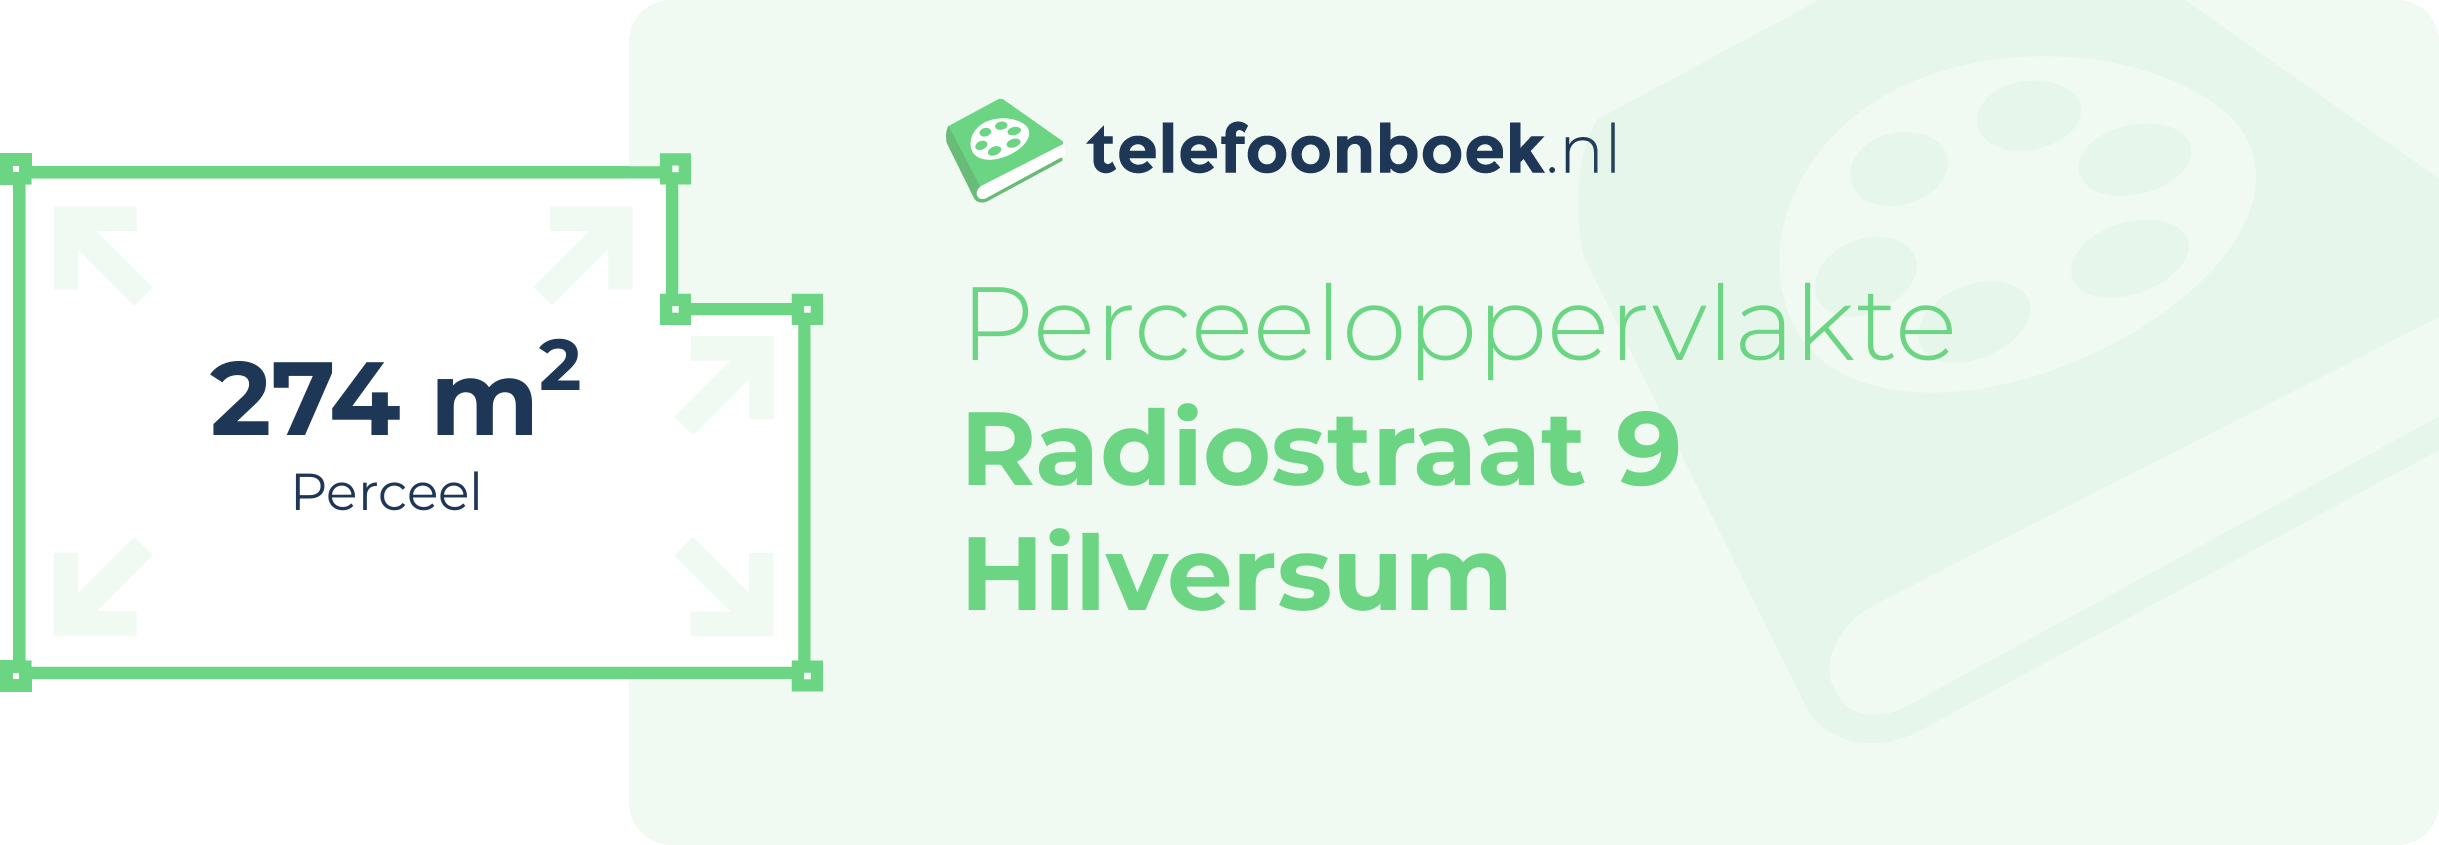 Perceeloppervlakte Radiostraat 9 Hilversum